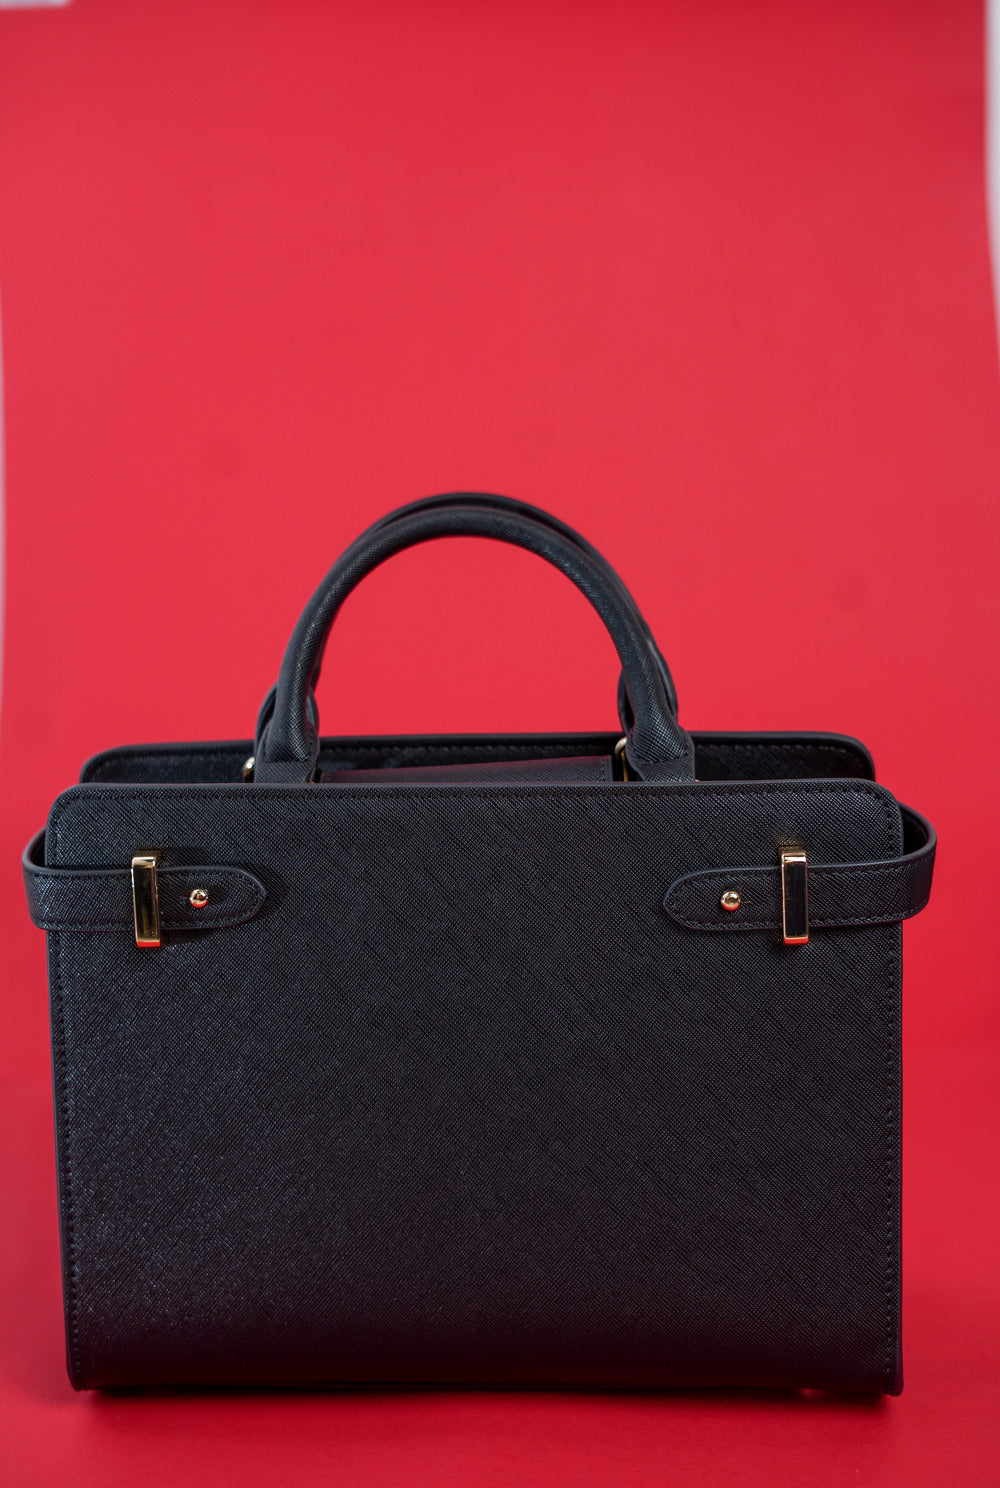 Classy Black Leather Handbag